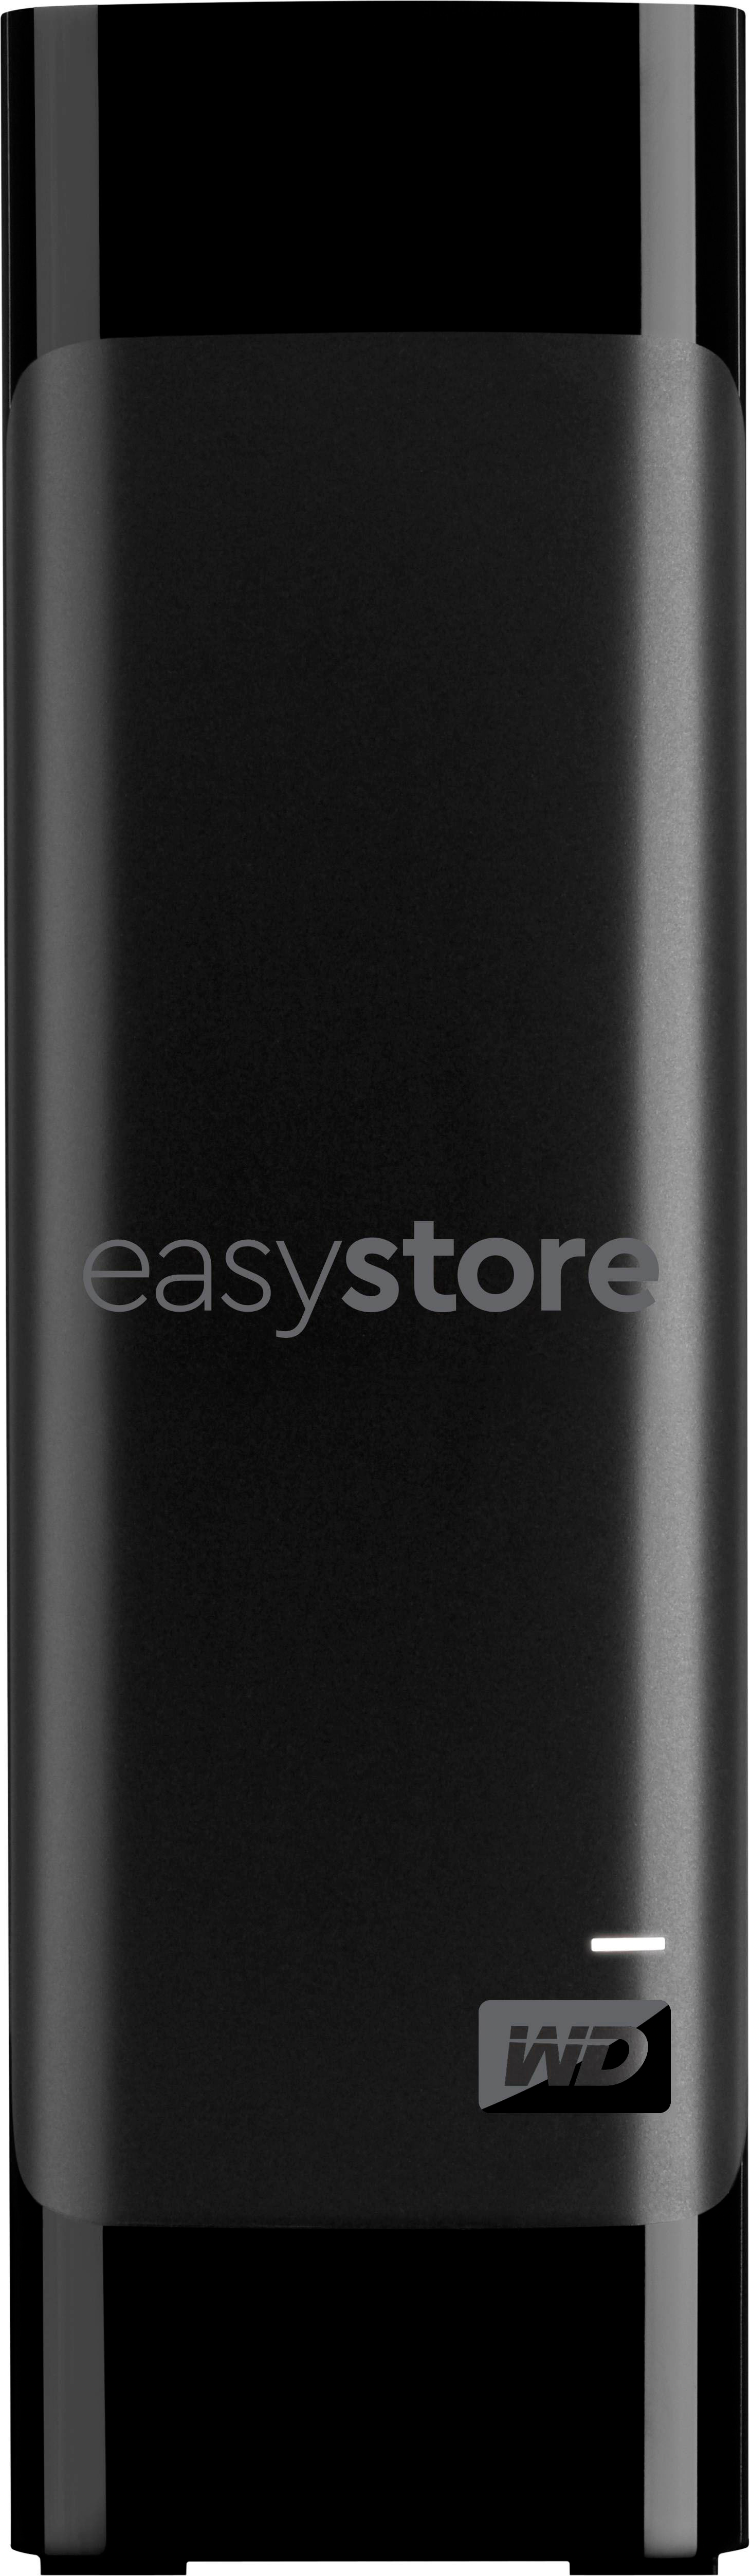 WD easystore 18TB External USB 3.0 Hard Drive Black WDBAMA0180HBK